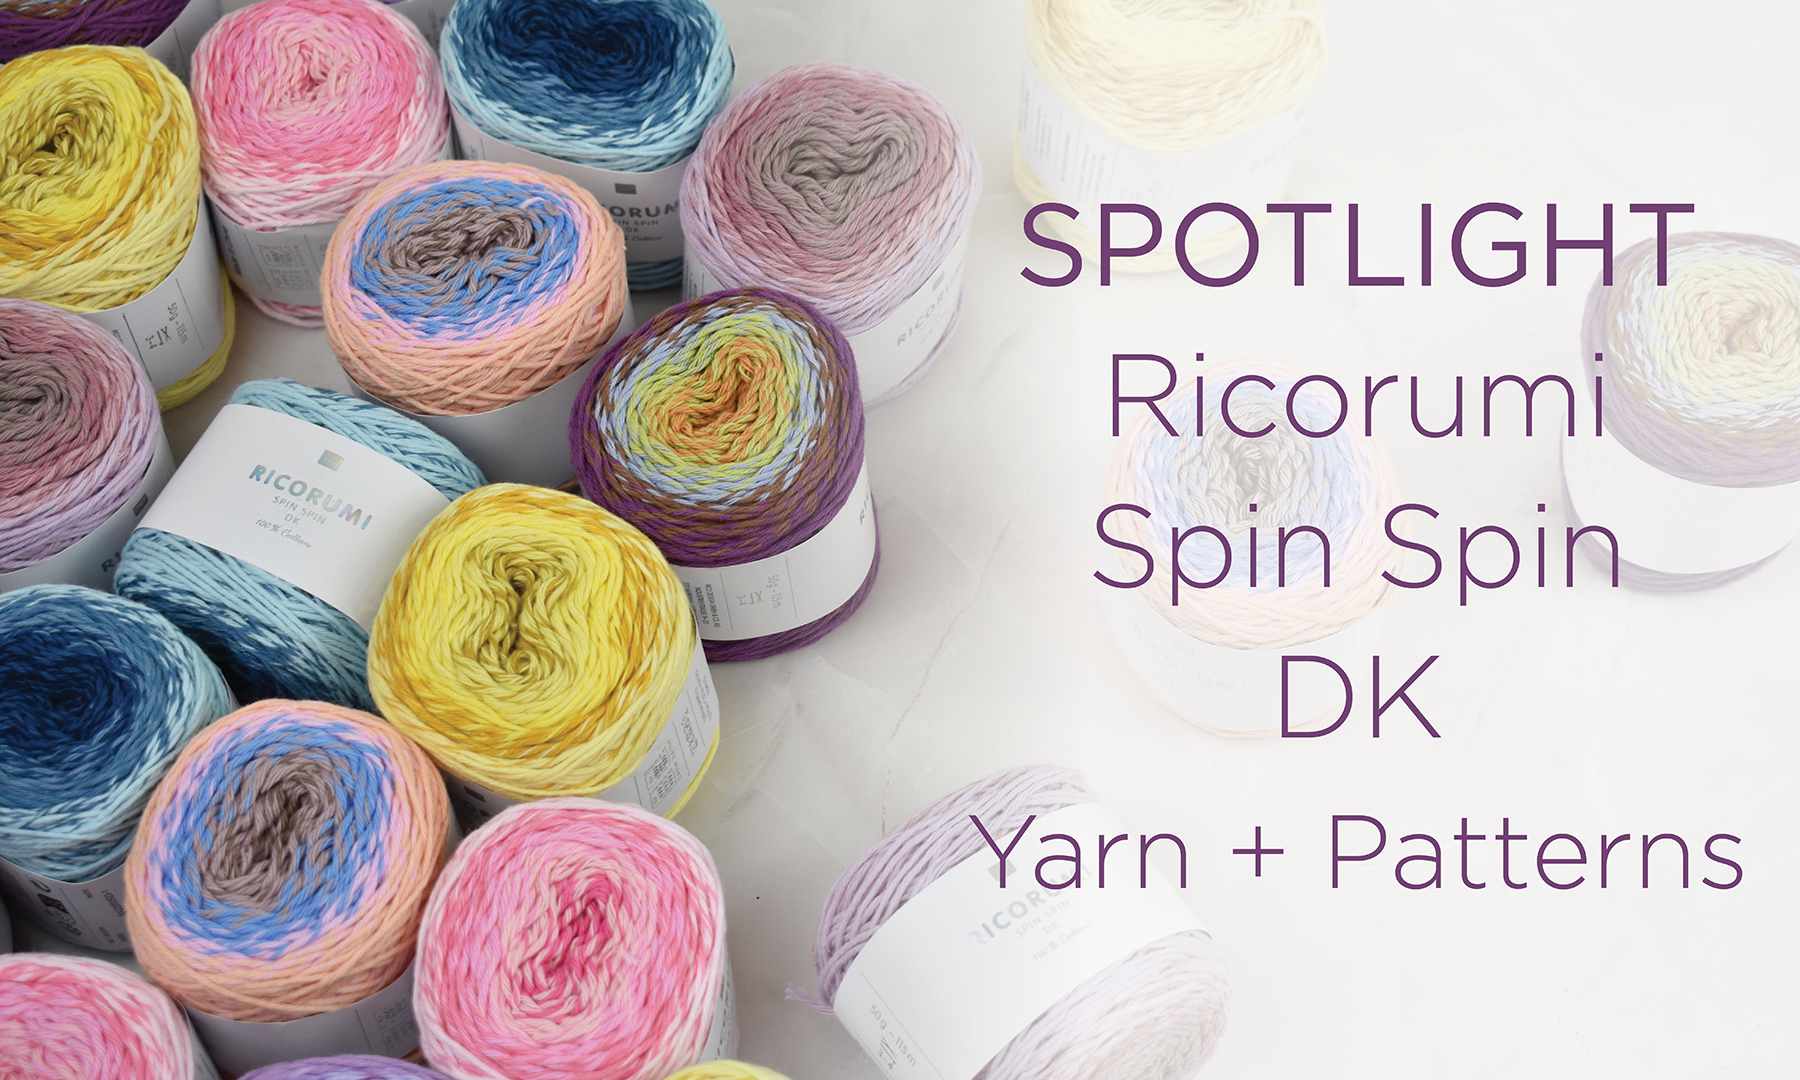 Rico RICORUMI DK 100% Cotton Amigurumi Crochet Yarn Cute Little 25g Balls!